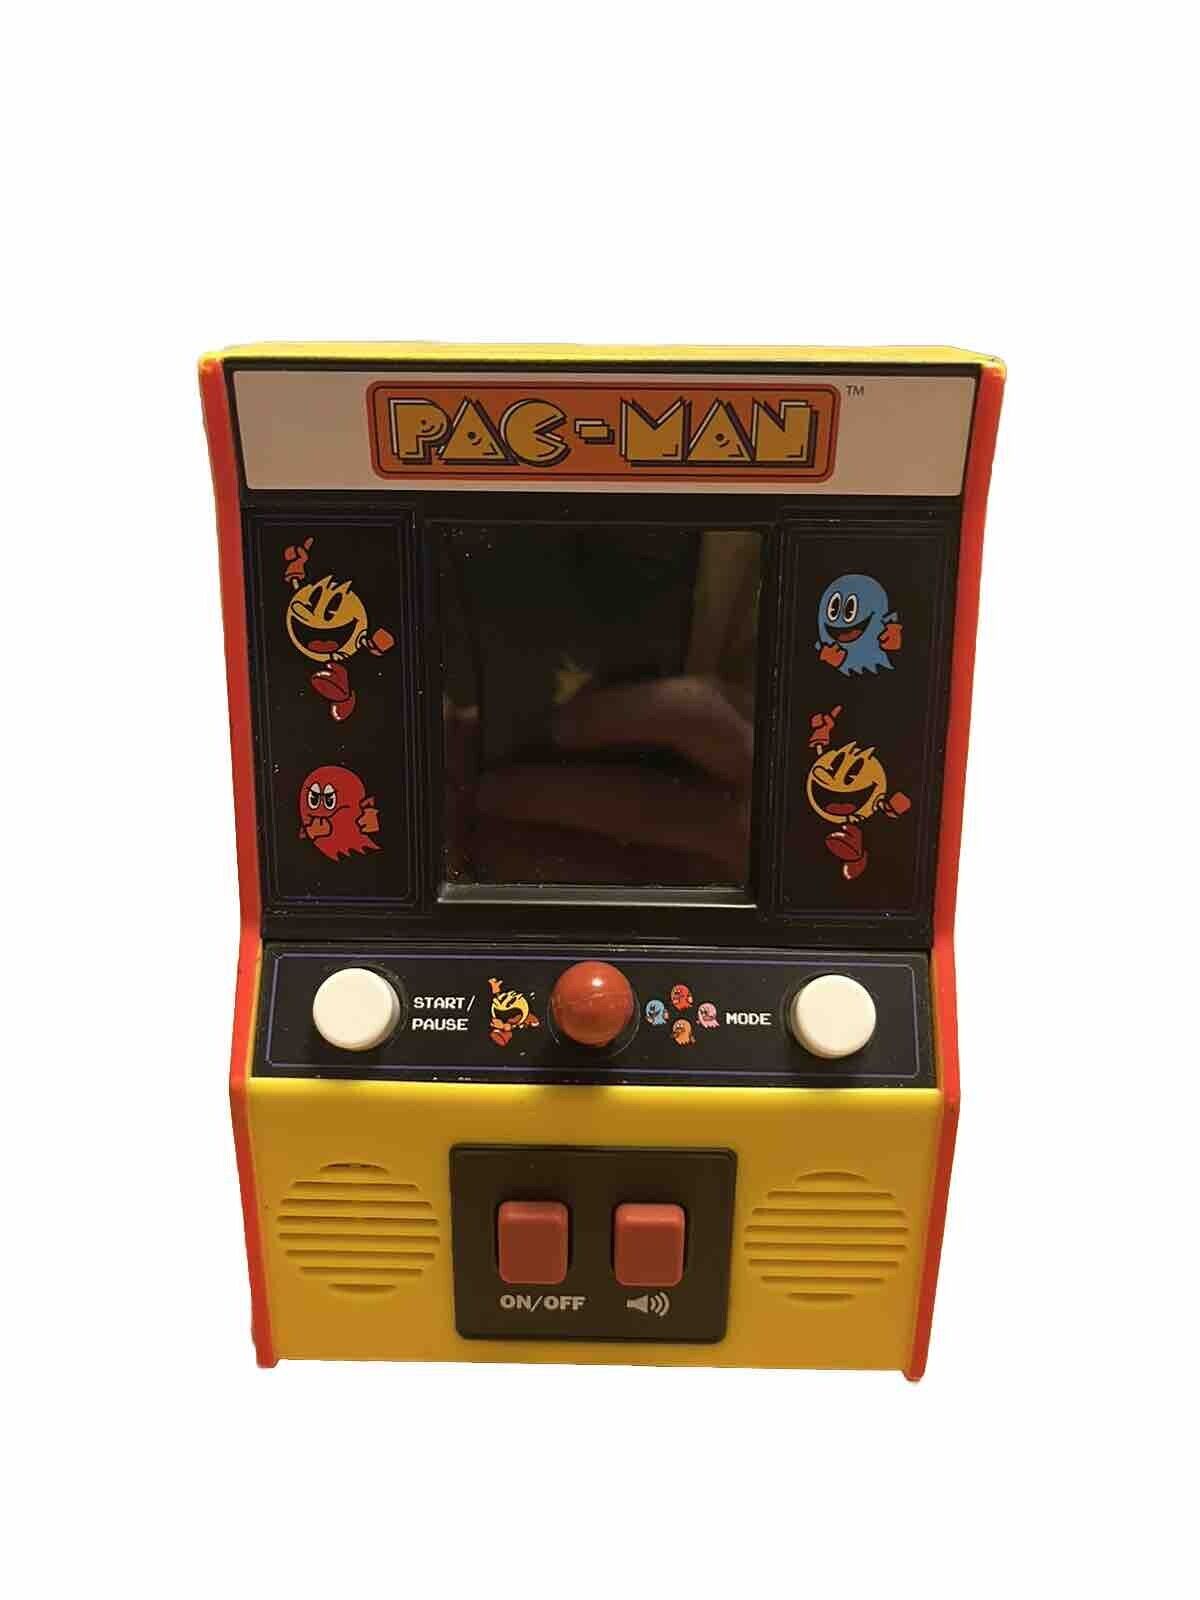 Pac-Man 2019 Retro Mini Arcade Machine Bandai Namco #09562 Tested Works